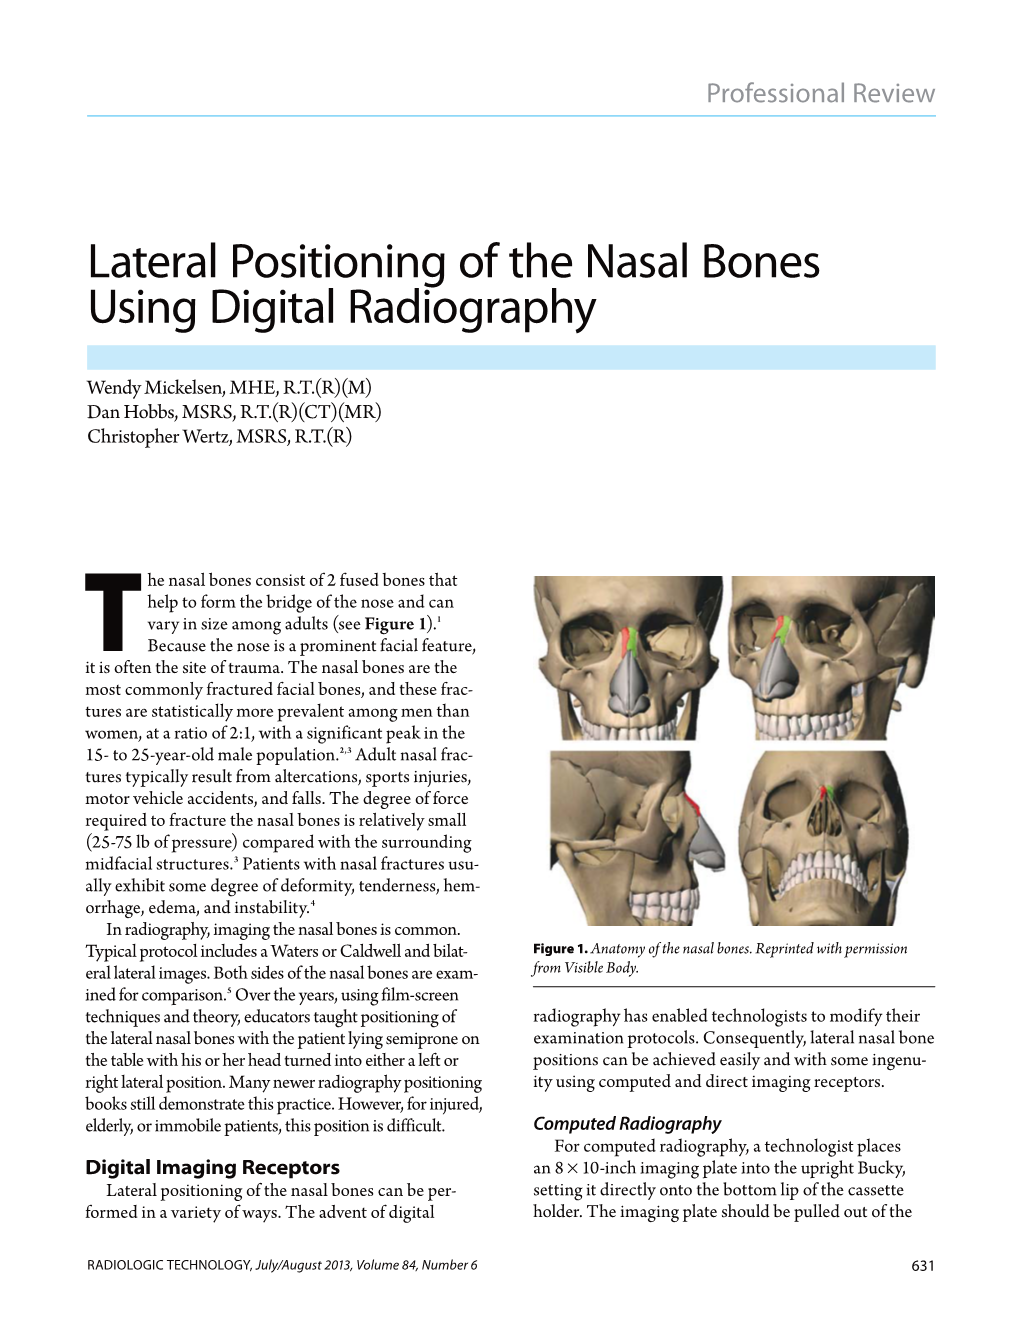 Lateral Positioning of the Nasal Bones Using Digital Radiography